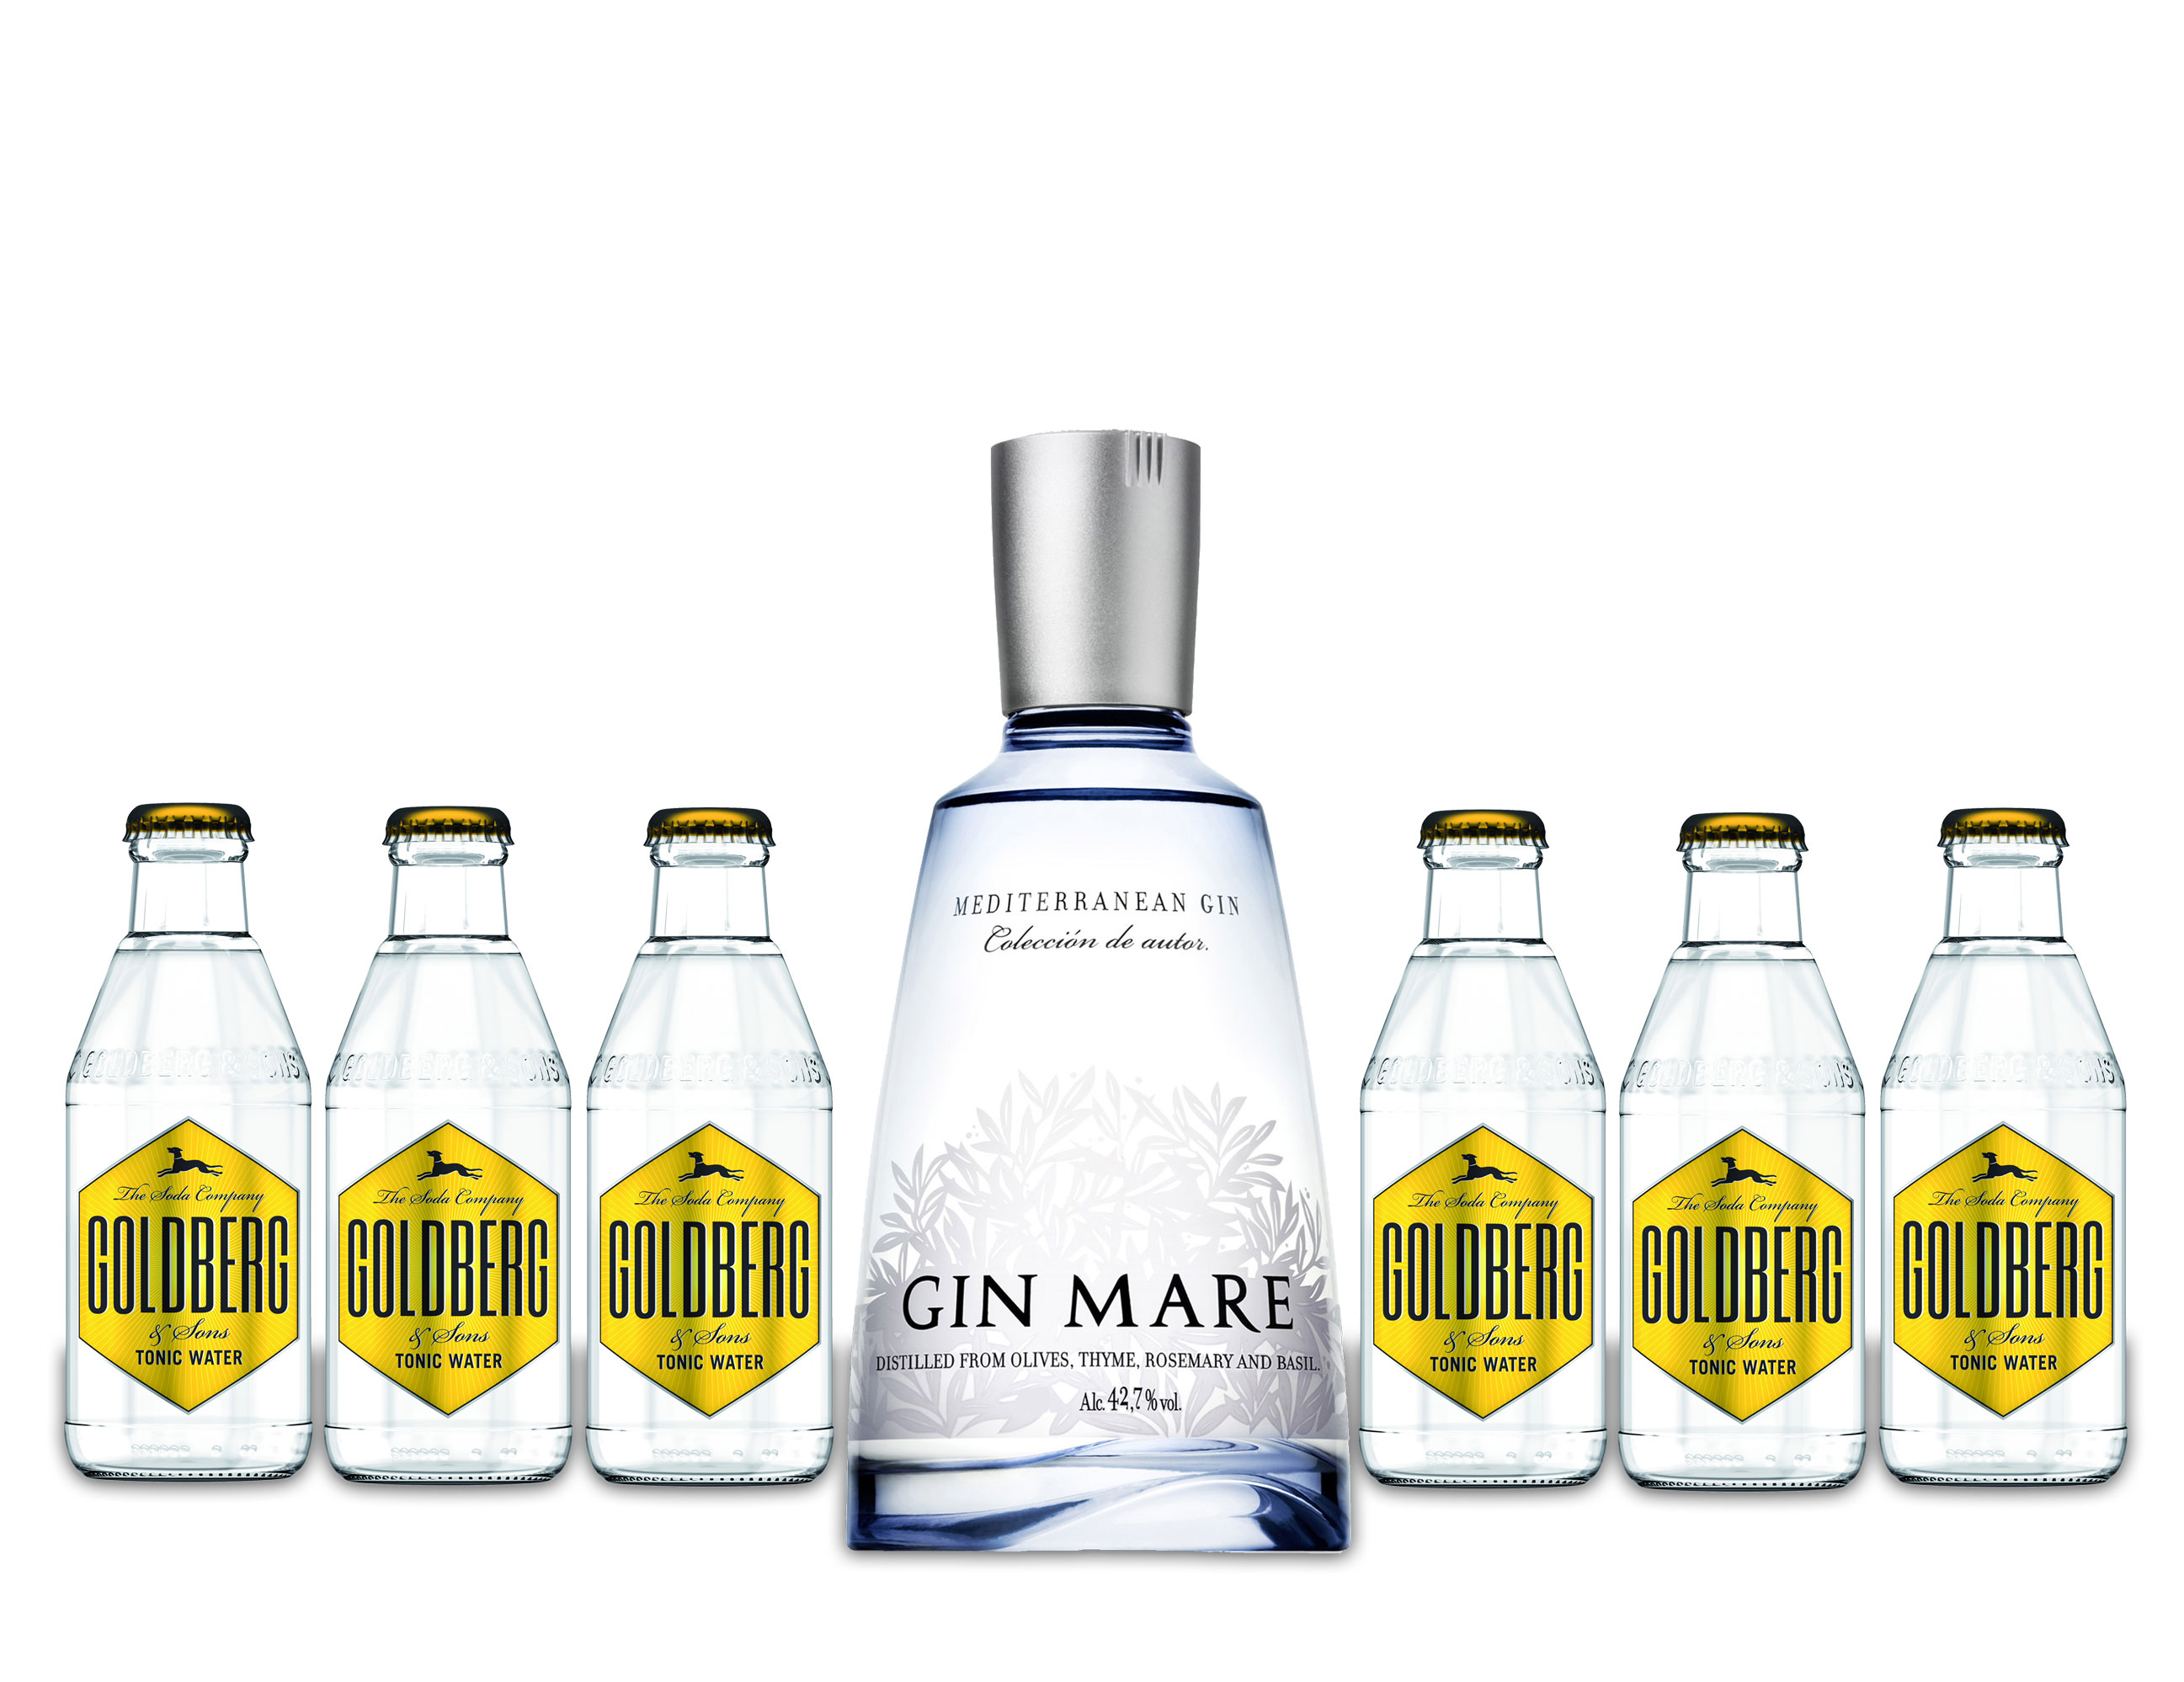 Gin Mare Gin Tonic Set - Gin Mare Gin 0,7l 700ml (42,7% Vol) + 6 Goldberg Tonic Water 200ml - Inkl. Pfand MEHRWEG